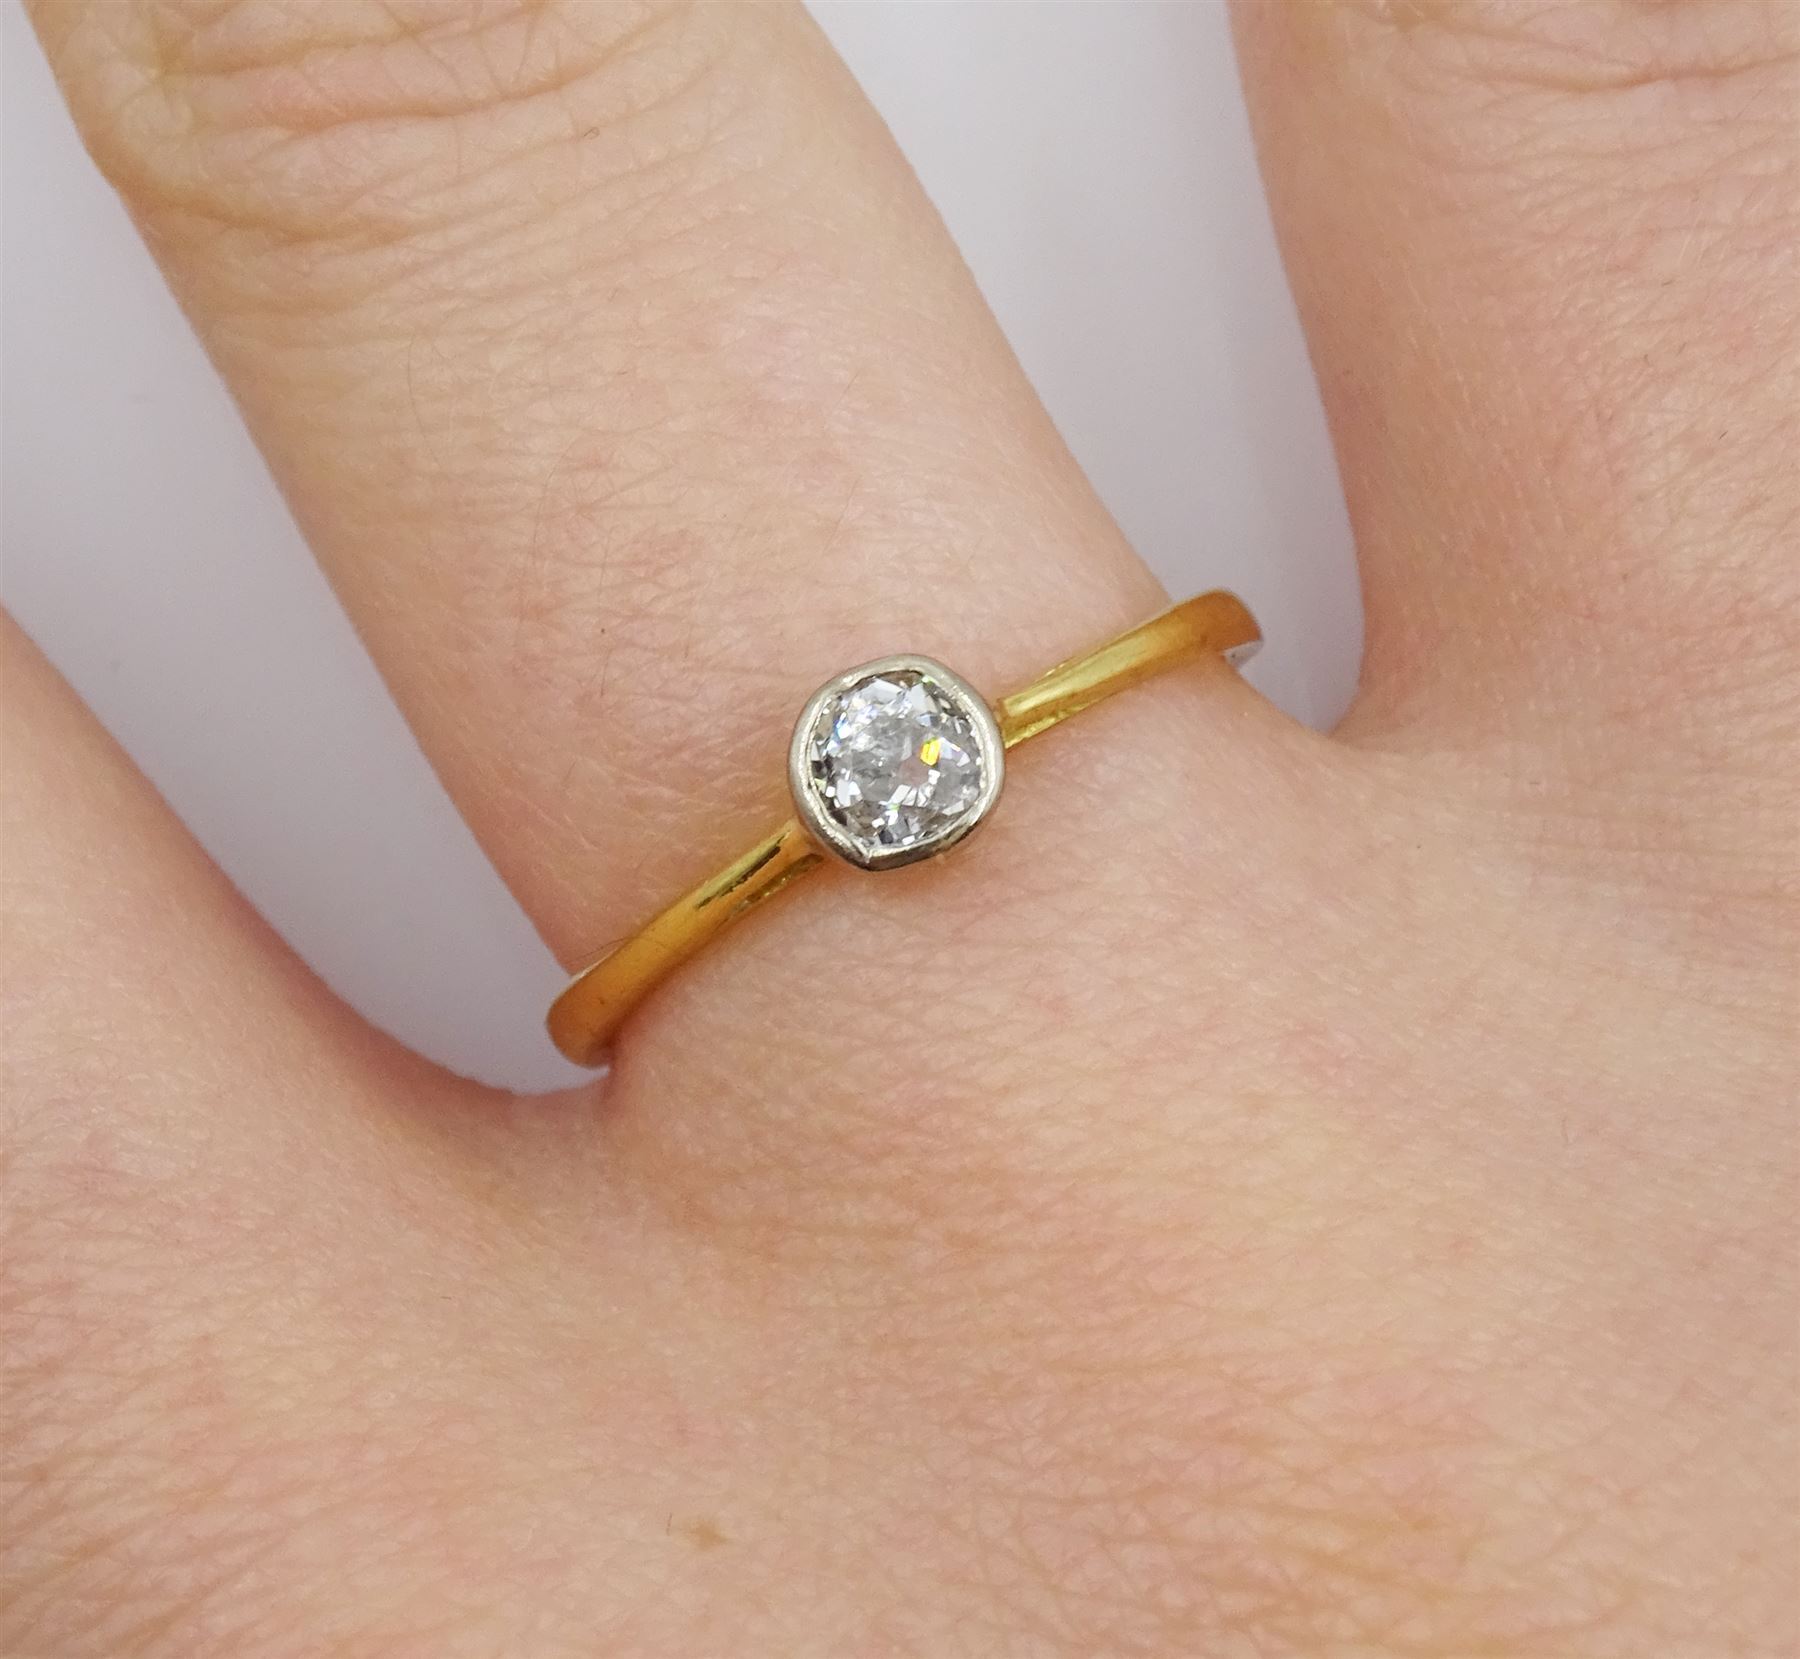 Early-mid 20th century gold bezel set single stone old cut diamond ring - Image 2 of 4